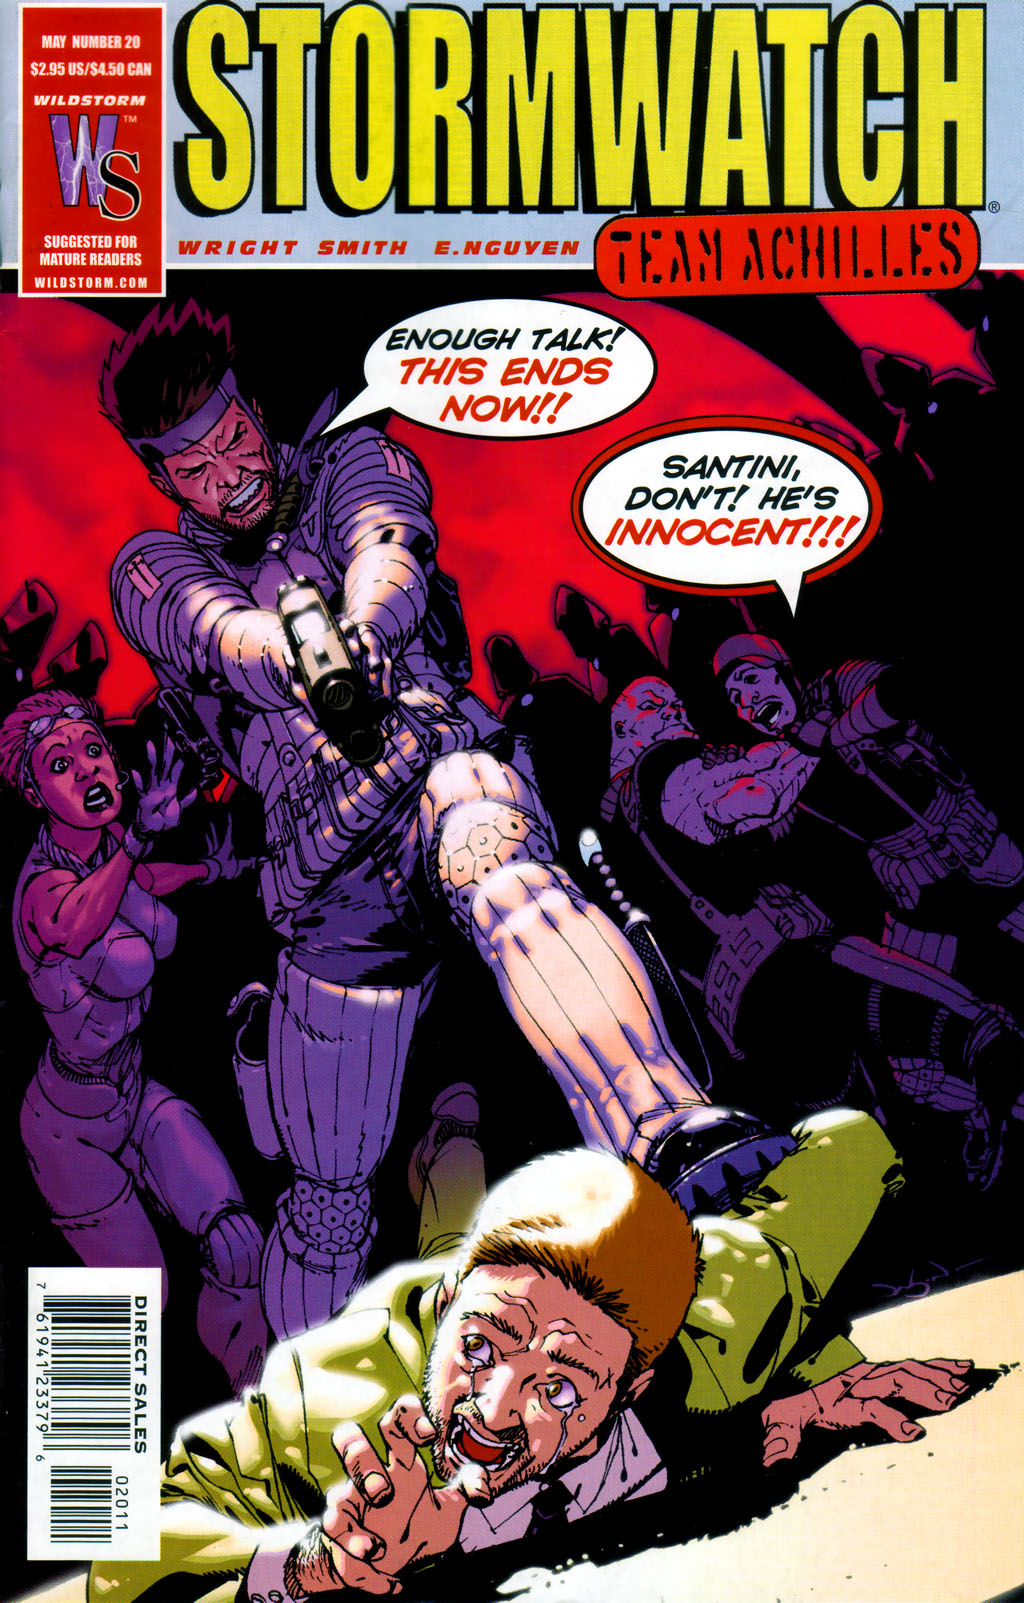 Read online Stormwatch: Team Achilles comic -  Issue #20 - 1